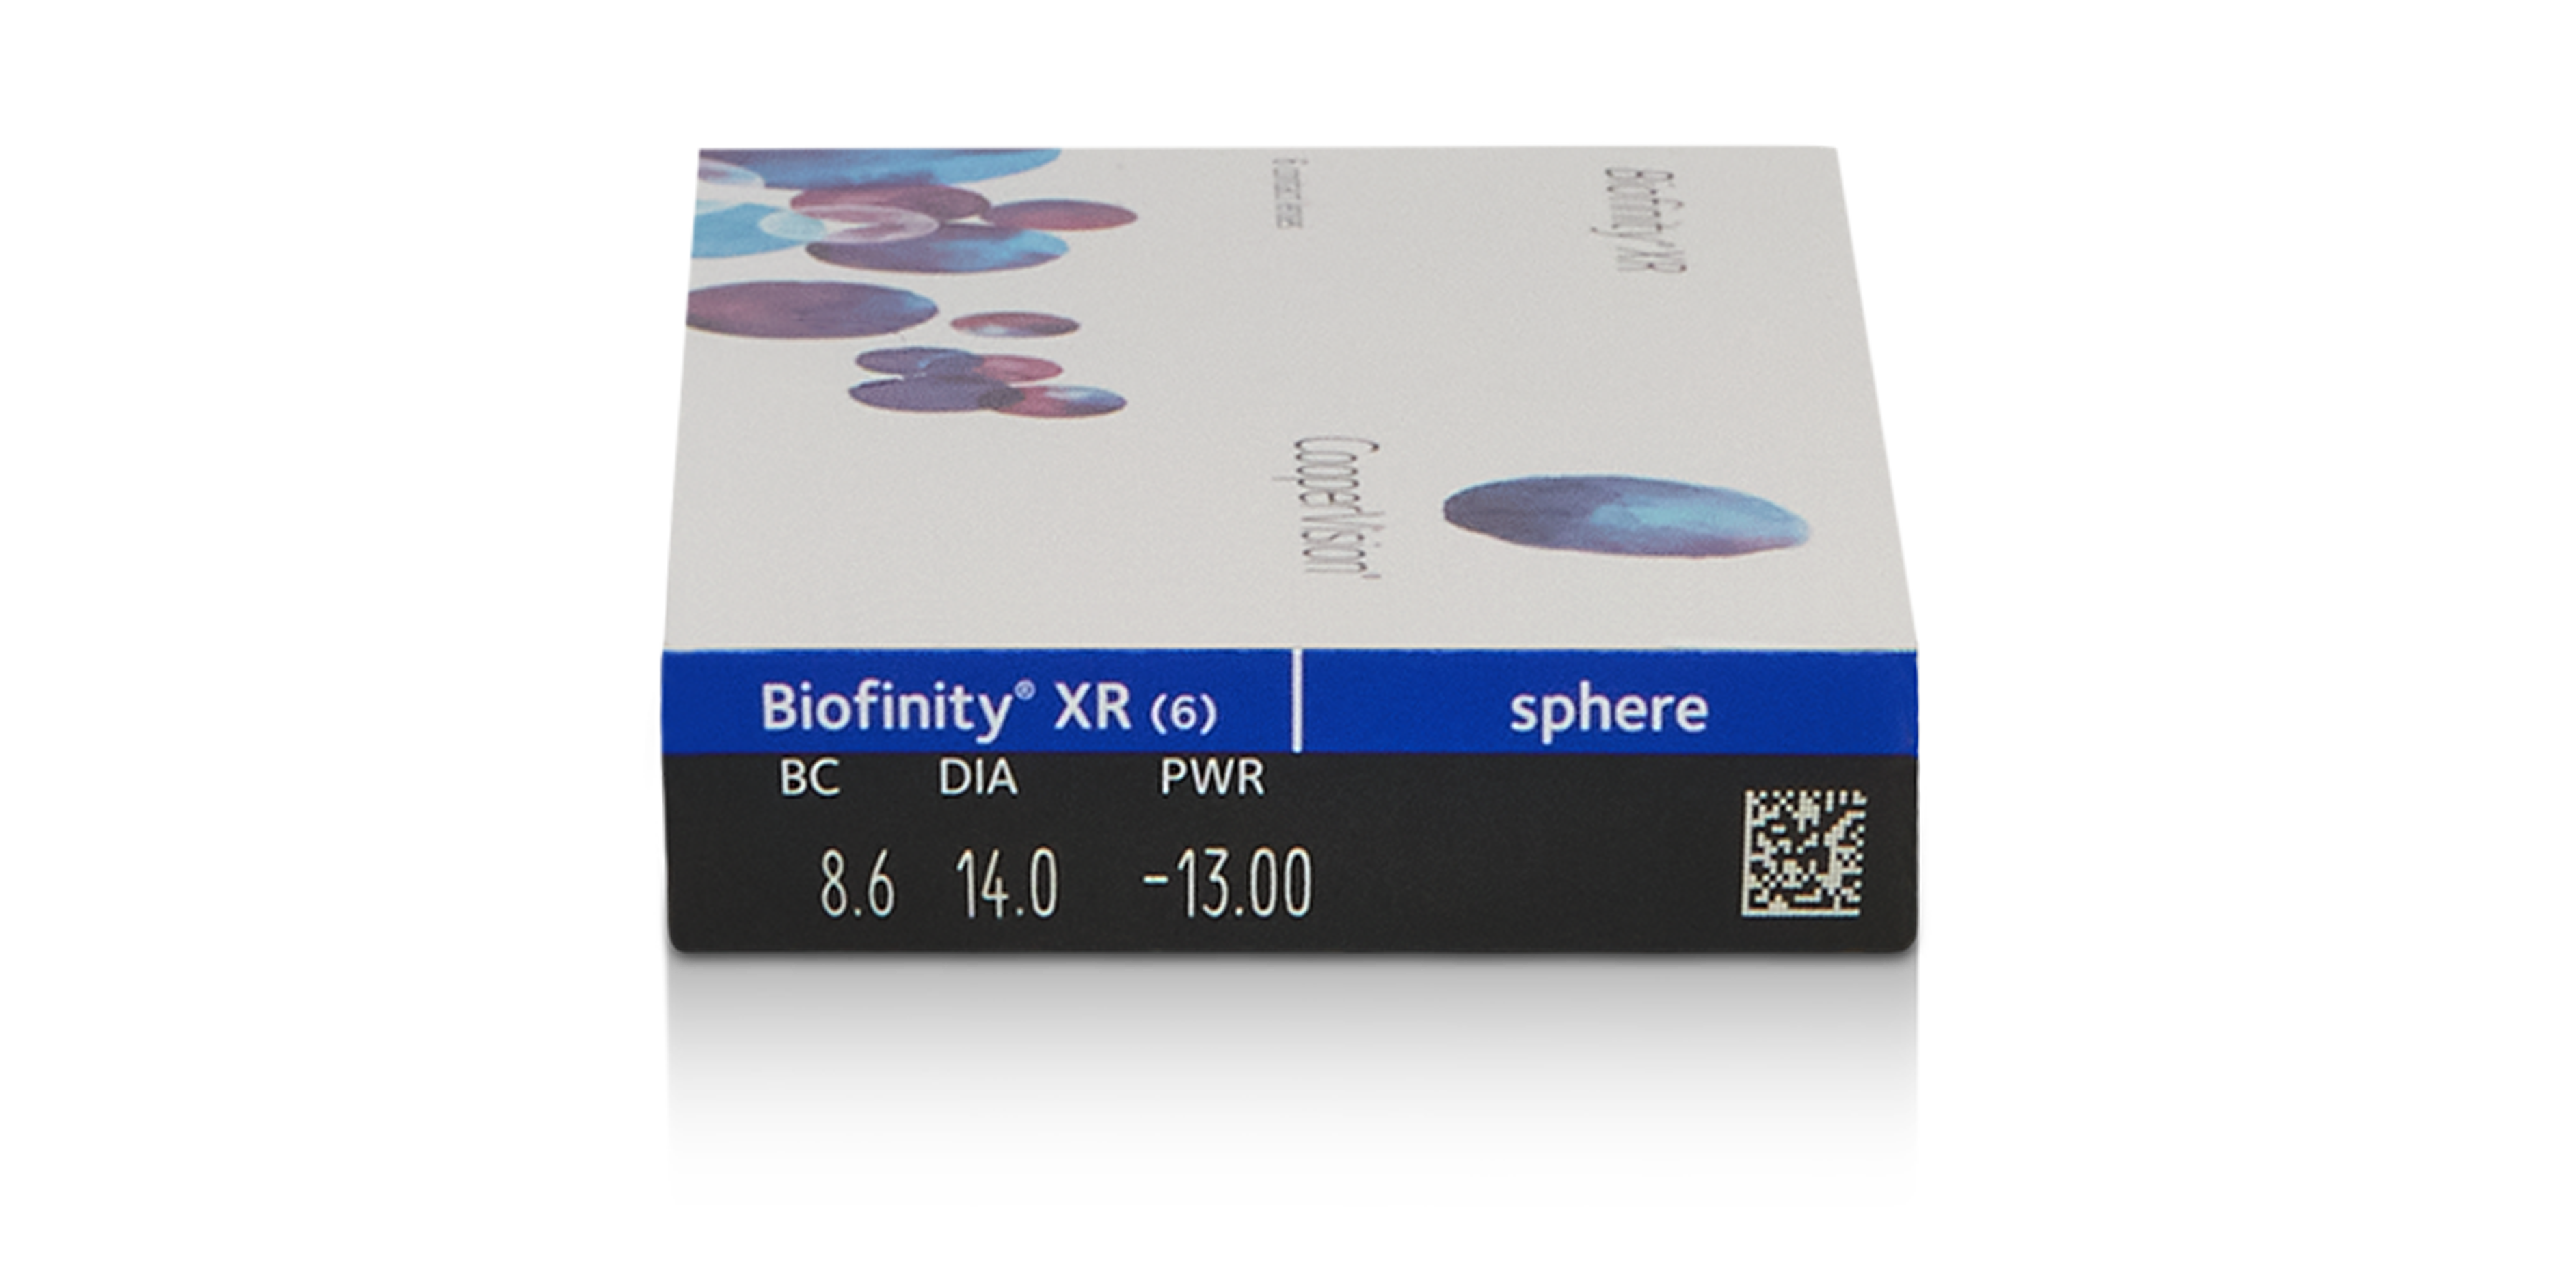 Biofinity XR, 6 pack